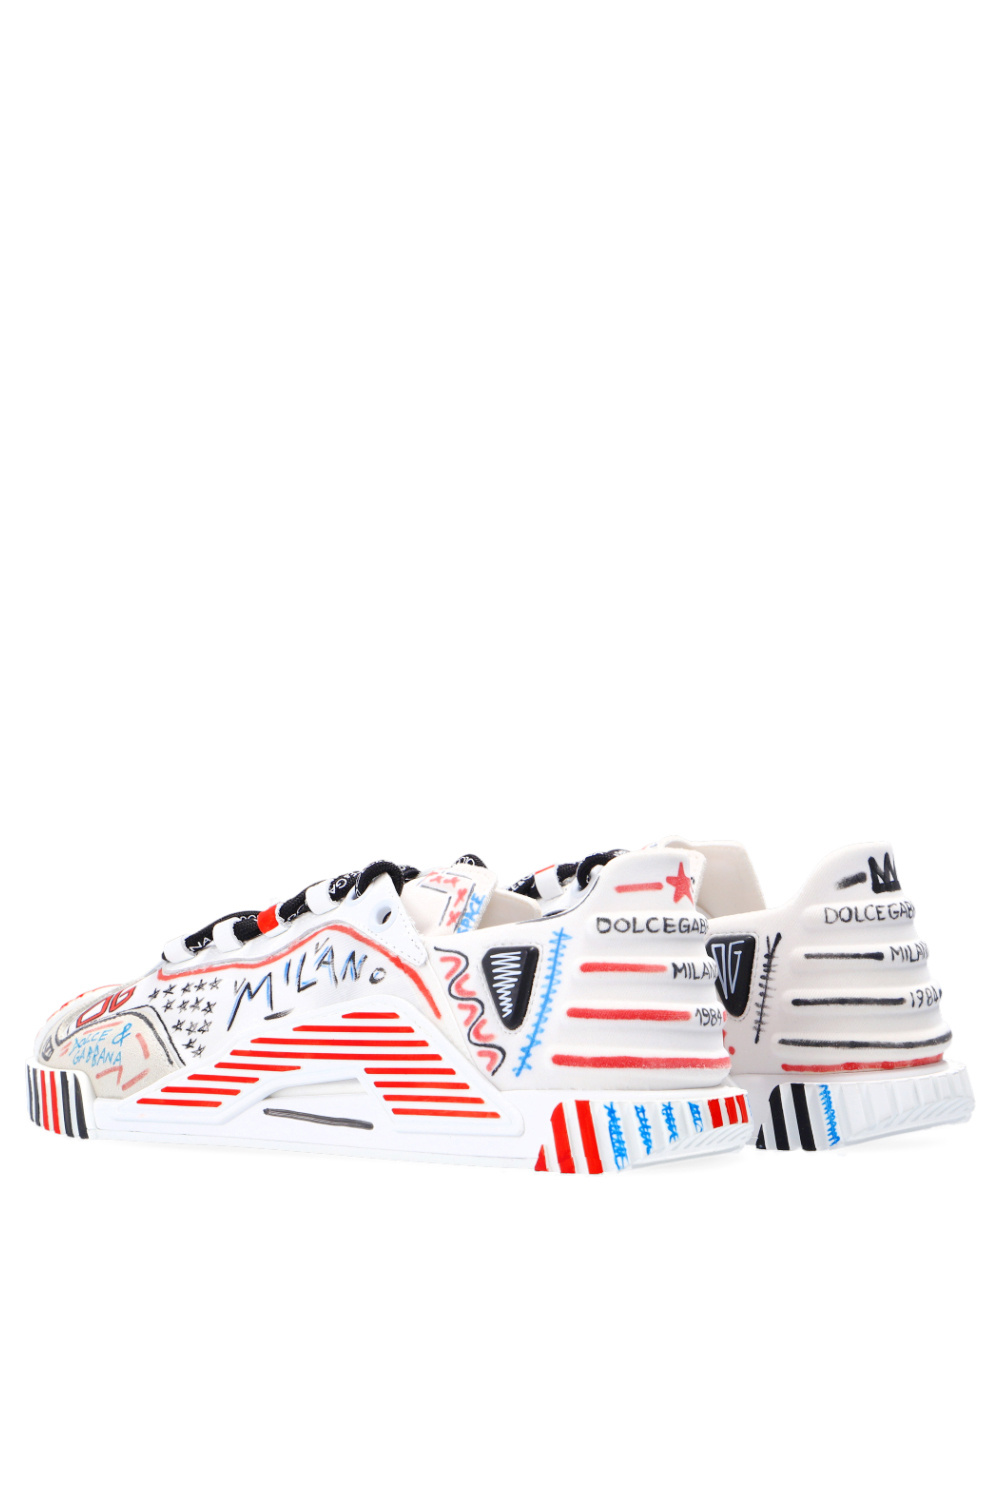 Dolce & Gabbana Slips 550799-22 ‘NS1’ sneakers